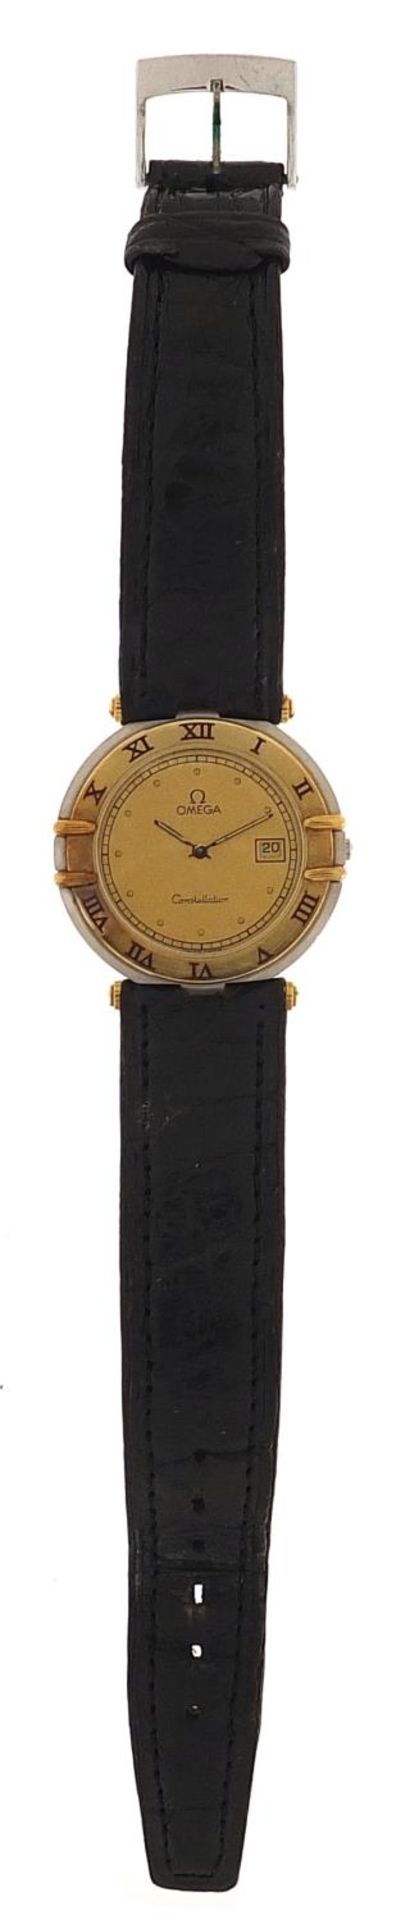 Omega Constellation gentlemen's wristwatch with date aperture, 32mm in diameter - Image 2 of 6